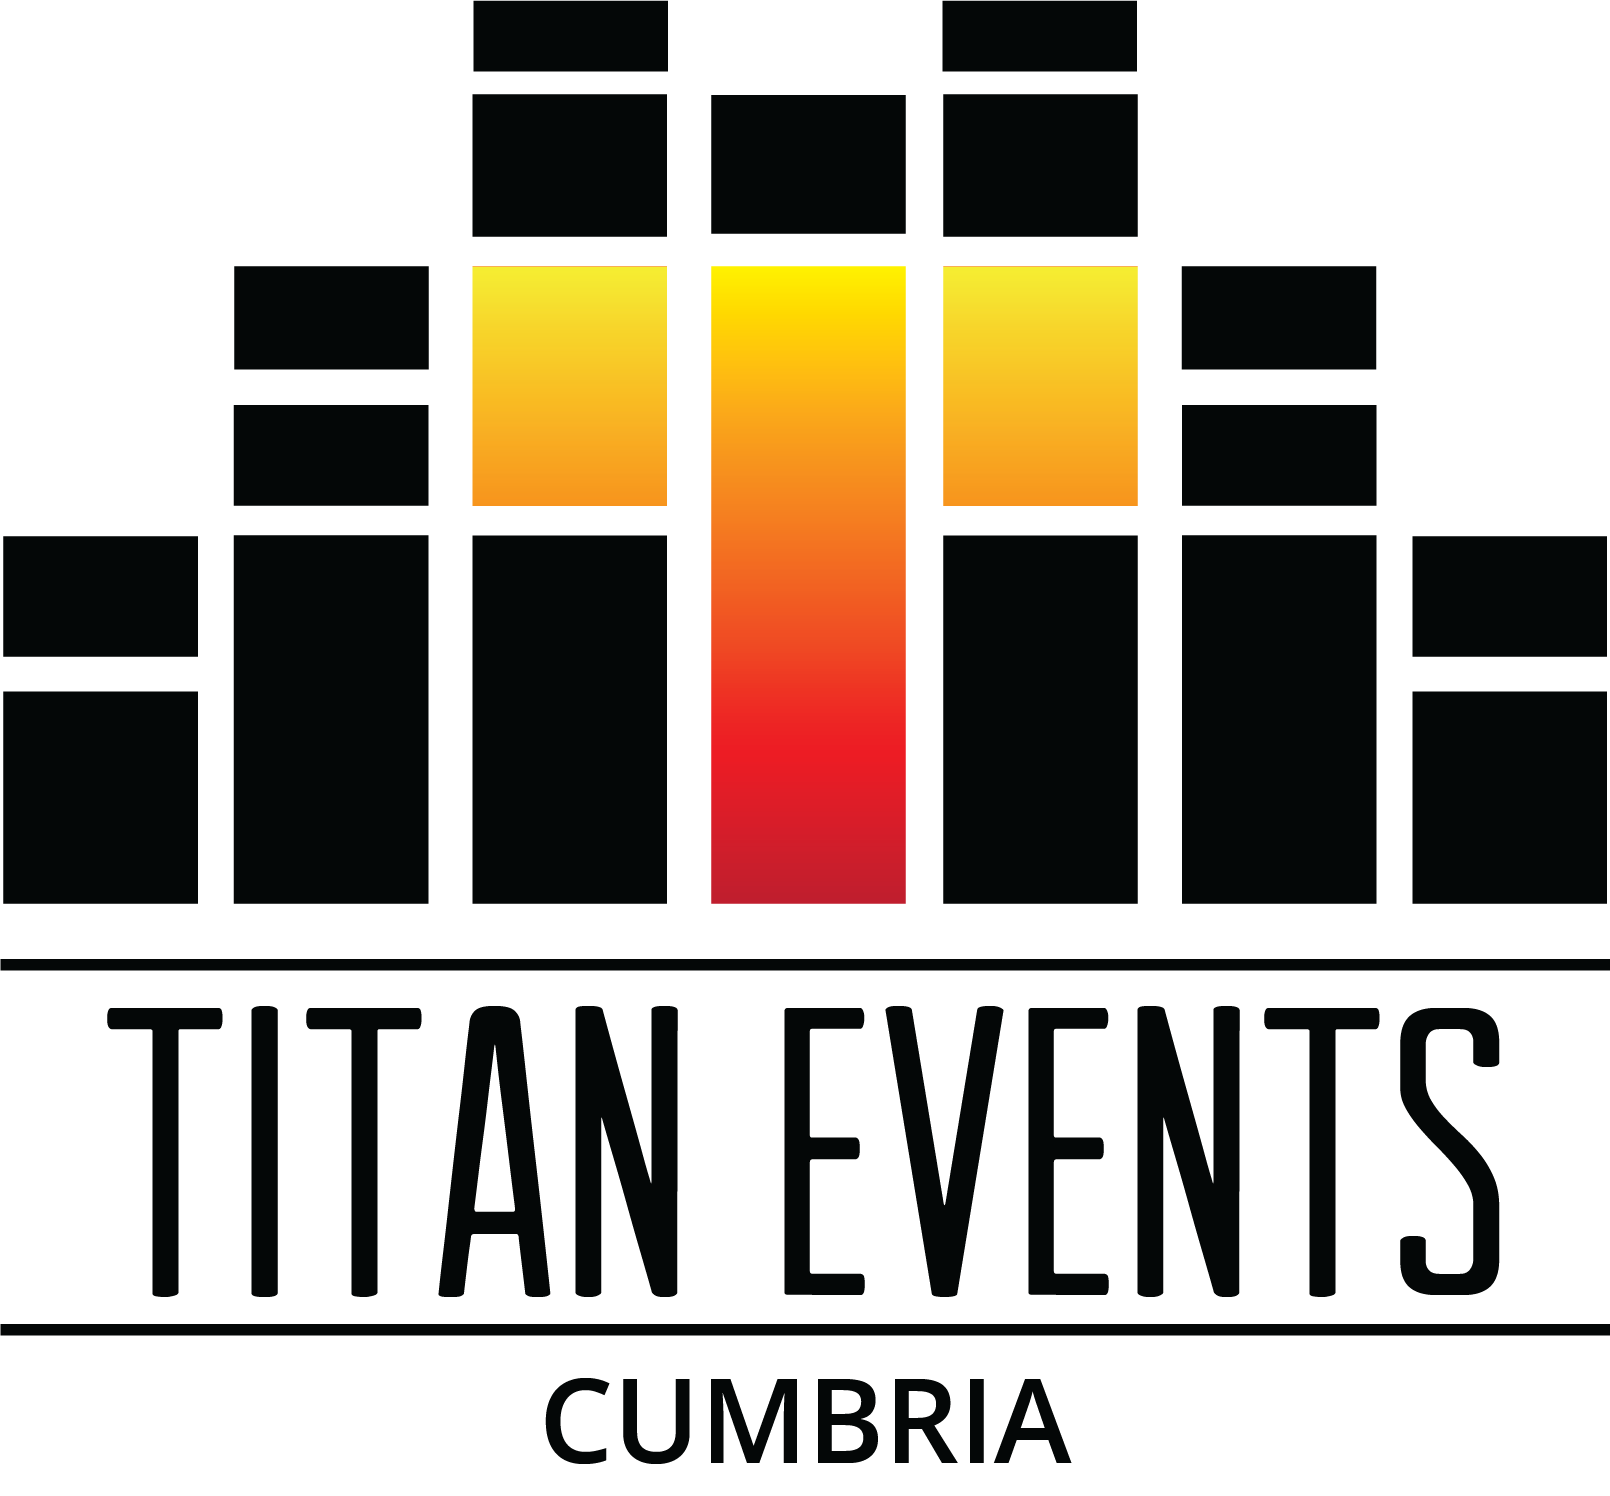 Titan Events Cumbria - Mobile Disco in Carlisle Cumbria - Magic Mirror Photo Booth